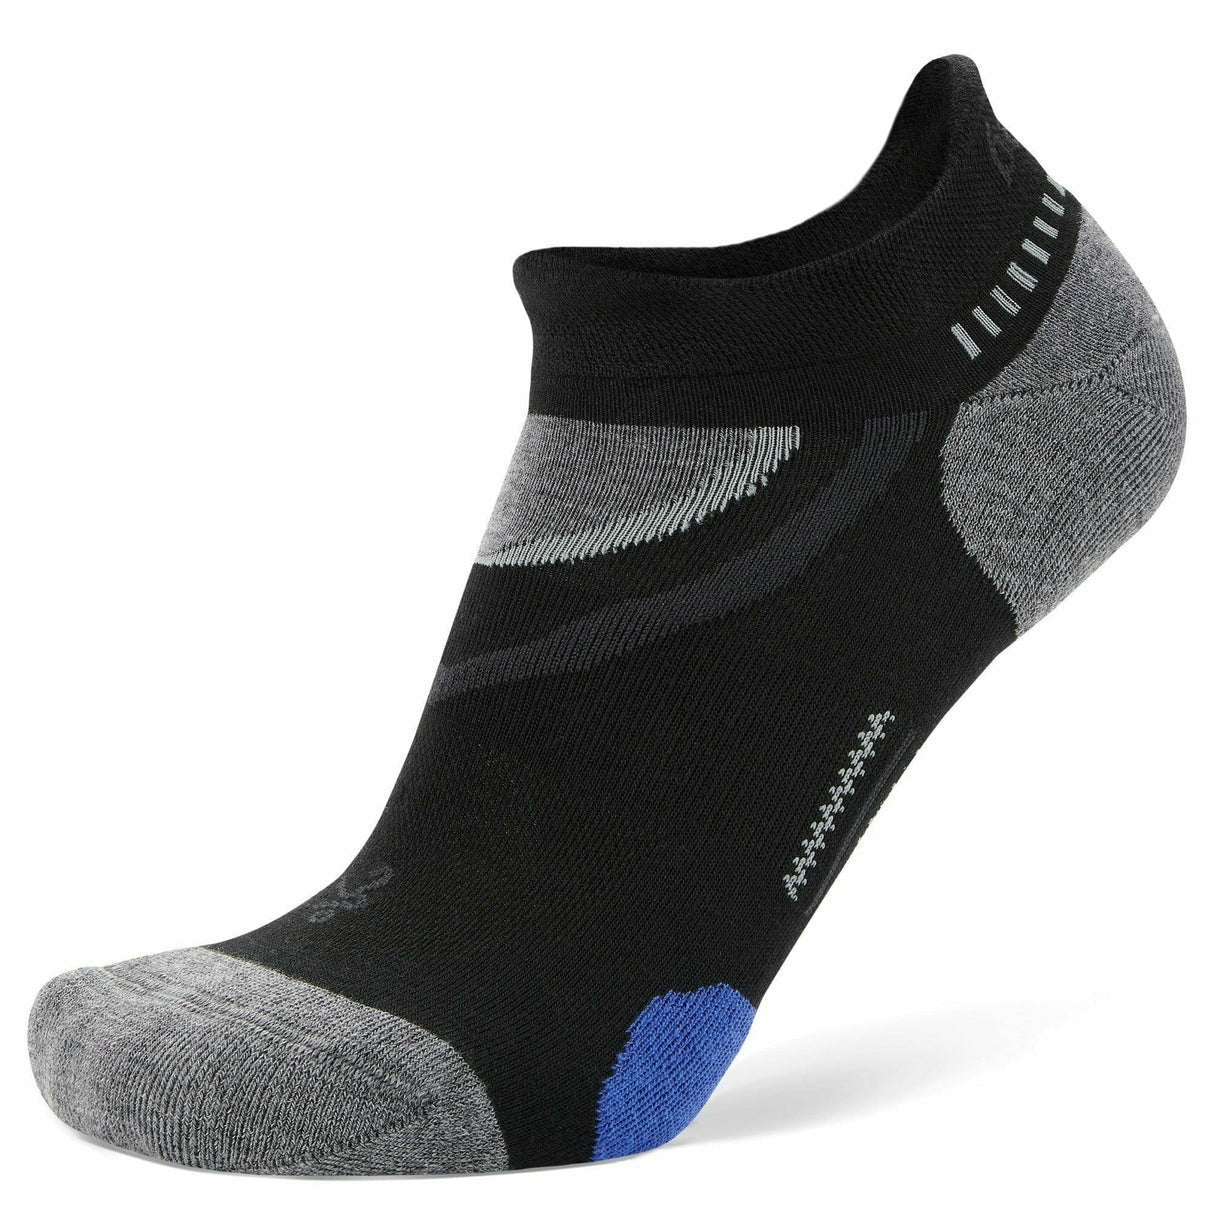 Balega UltraGlide No Show Socks  -  Small / Black/Gray